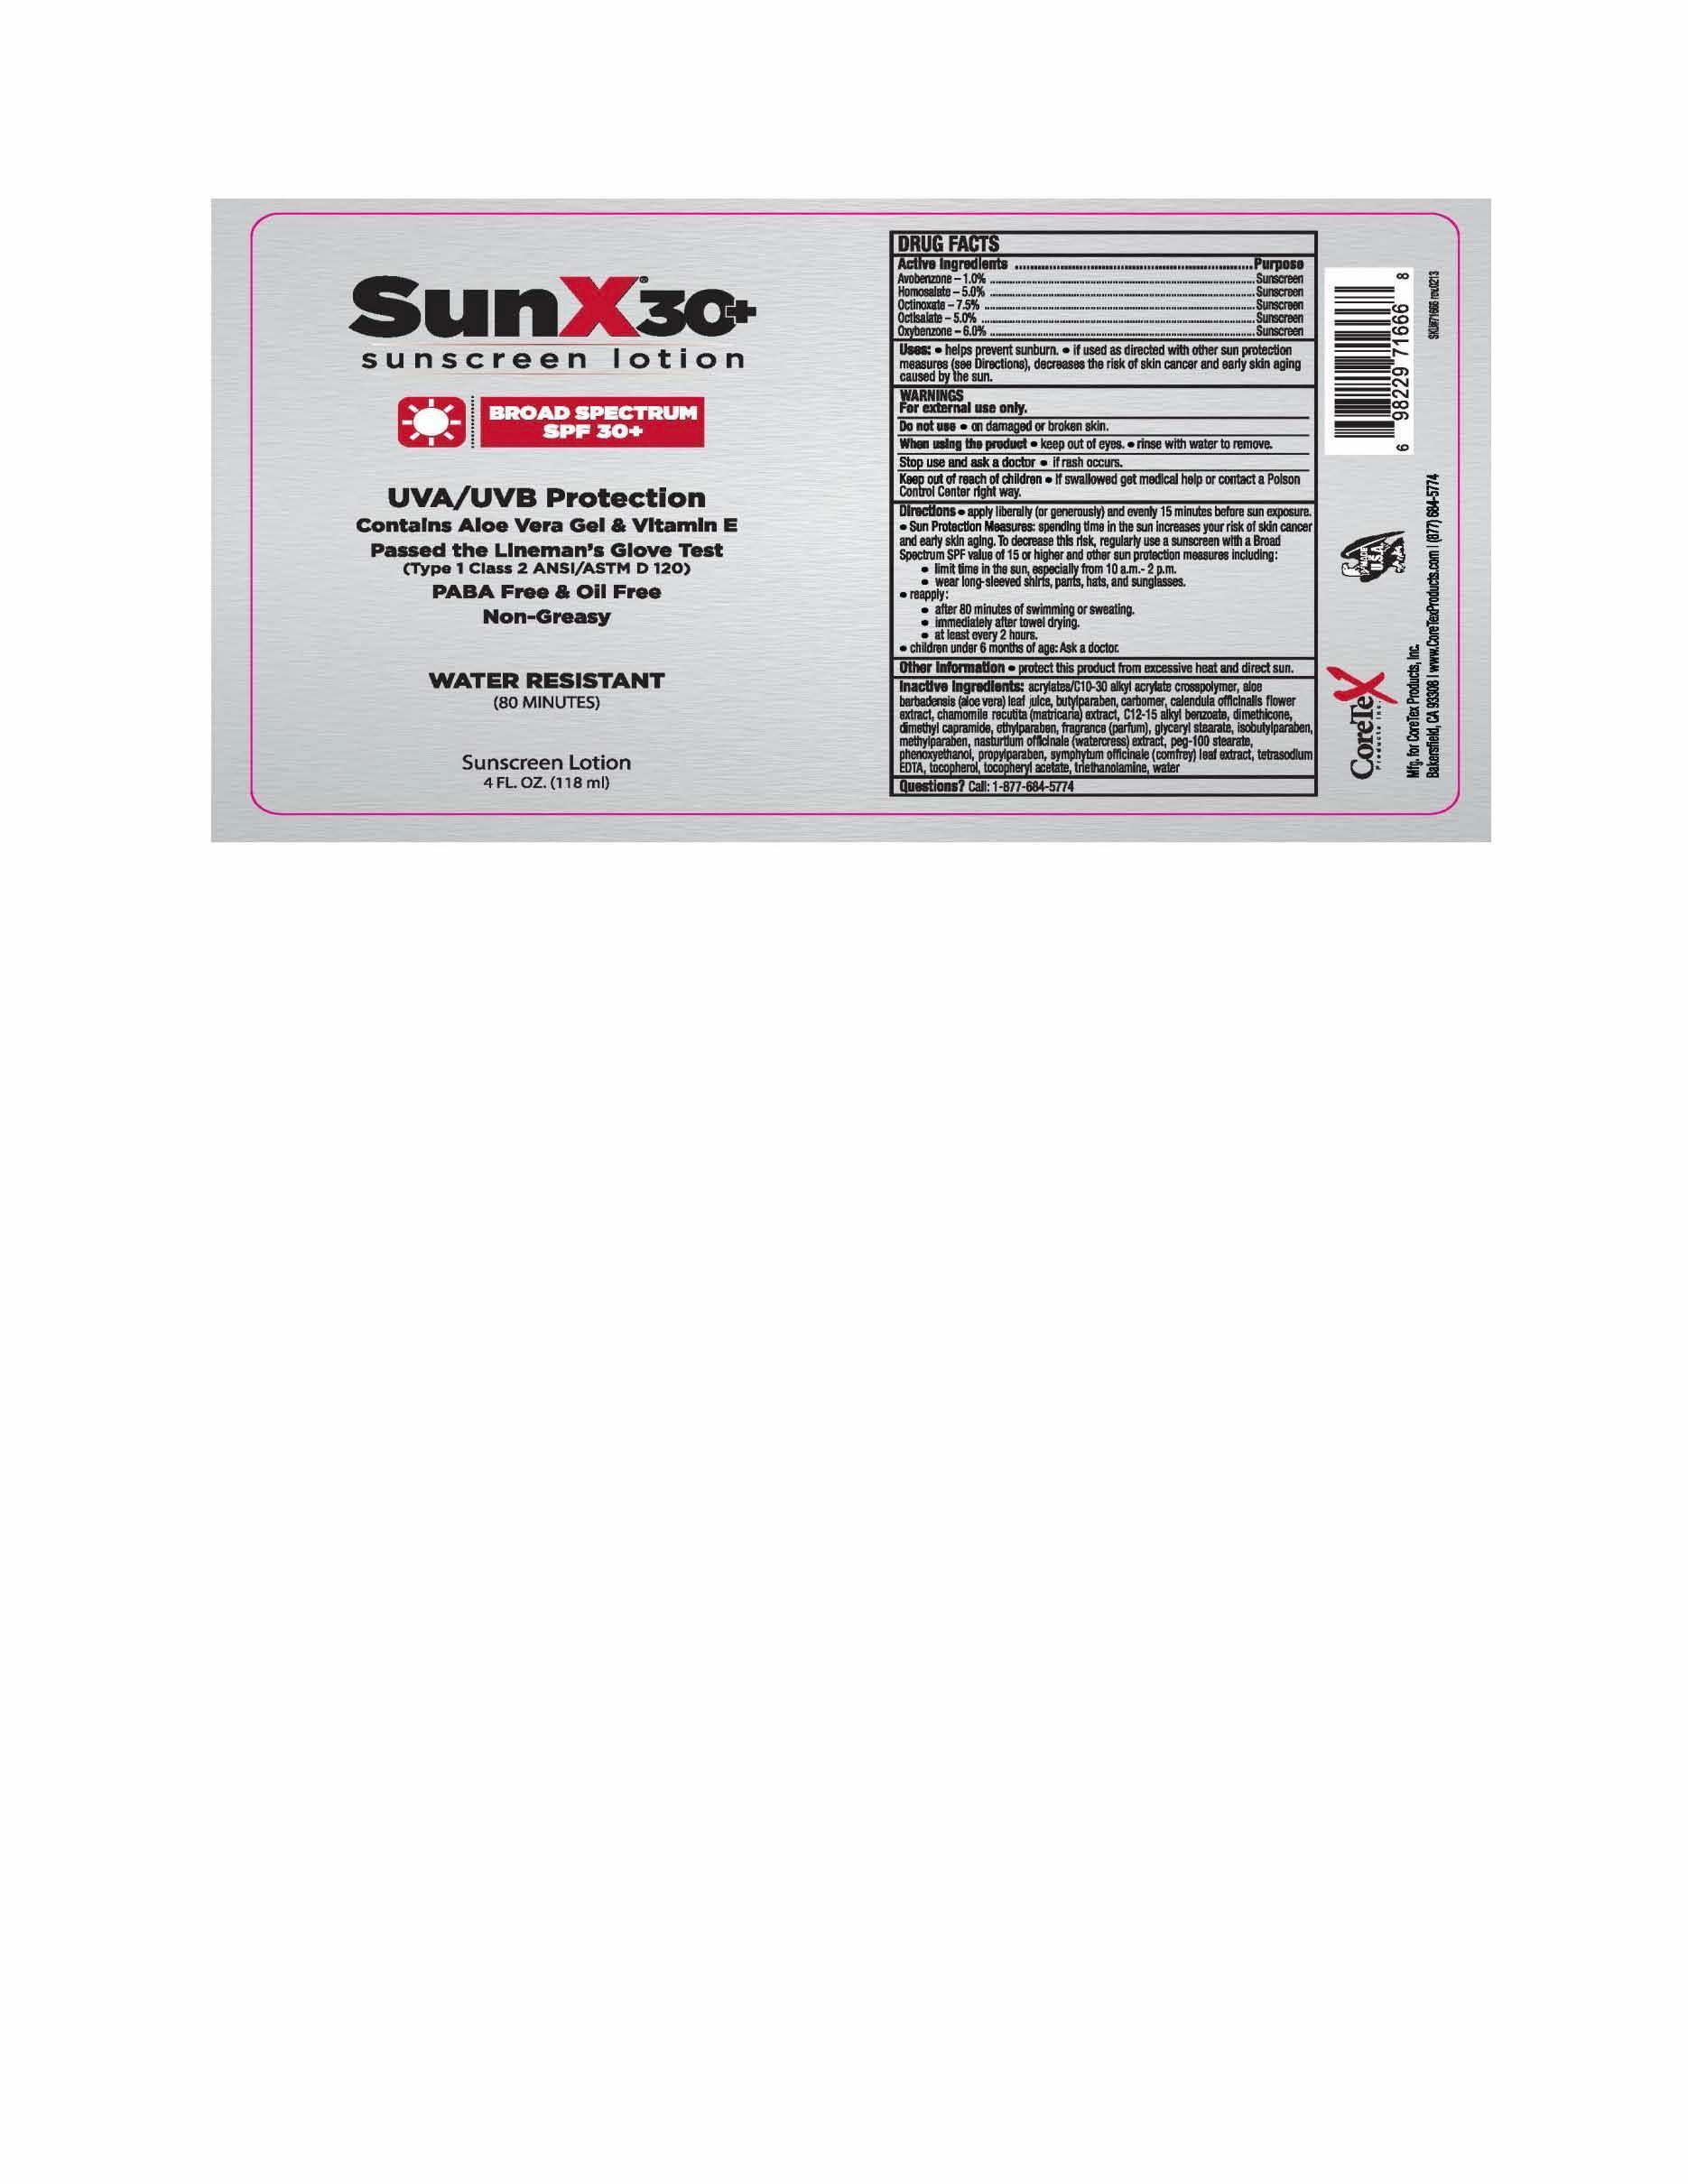 SunX SPF 30